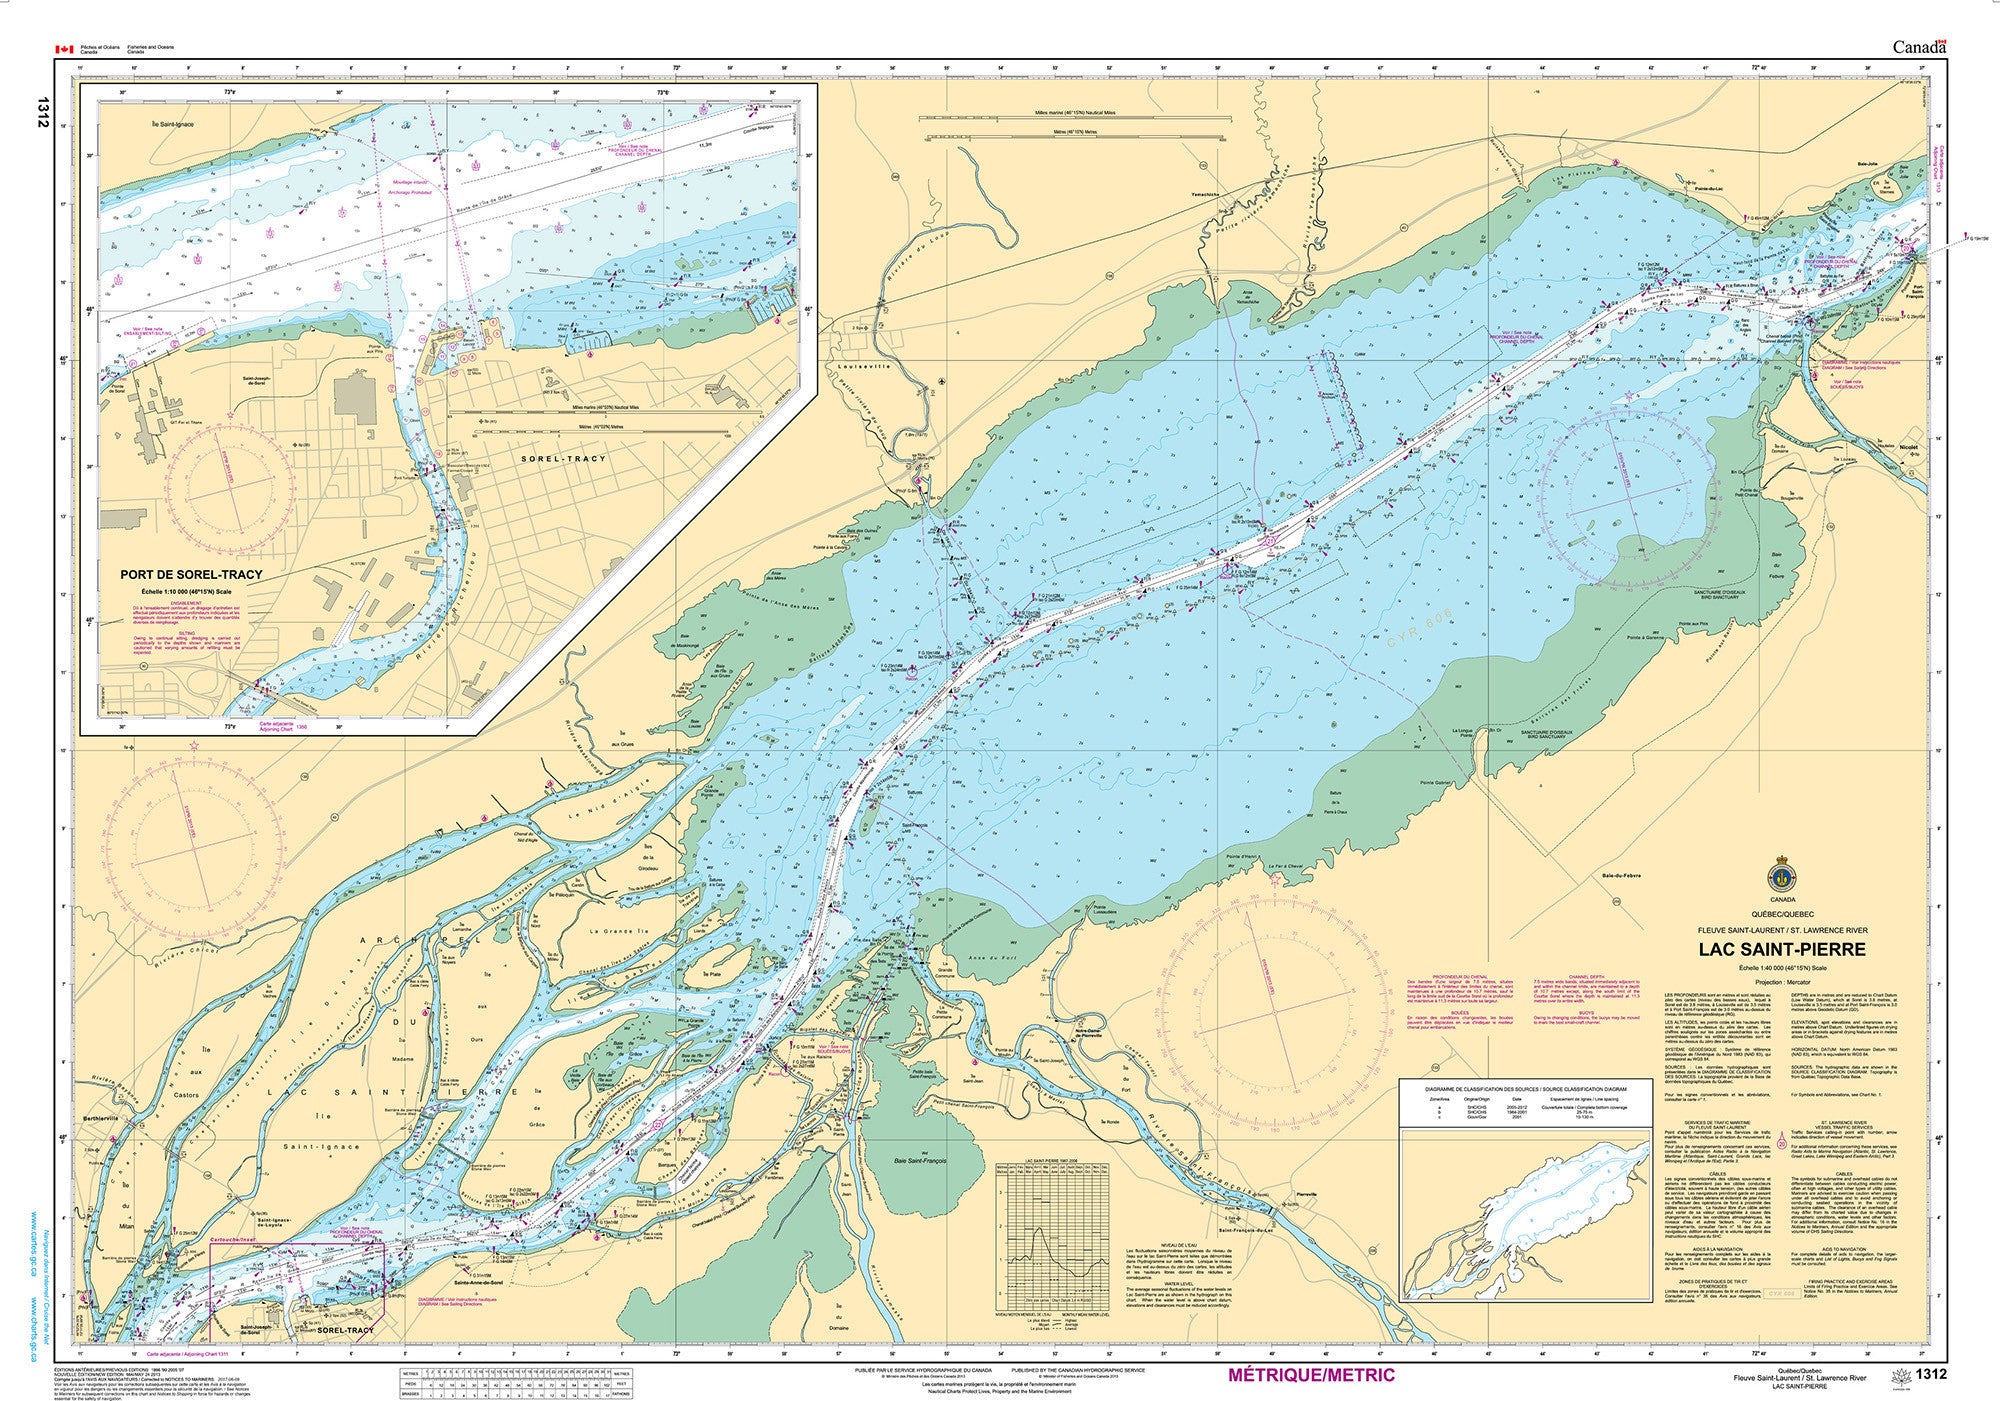 Canadian Hydrographic Service Nautical Chart CHS1312: Lac Saint-Pierre